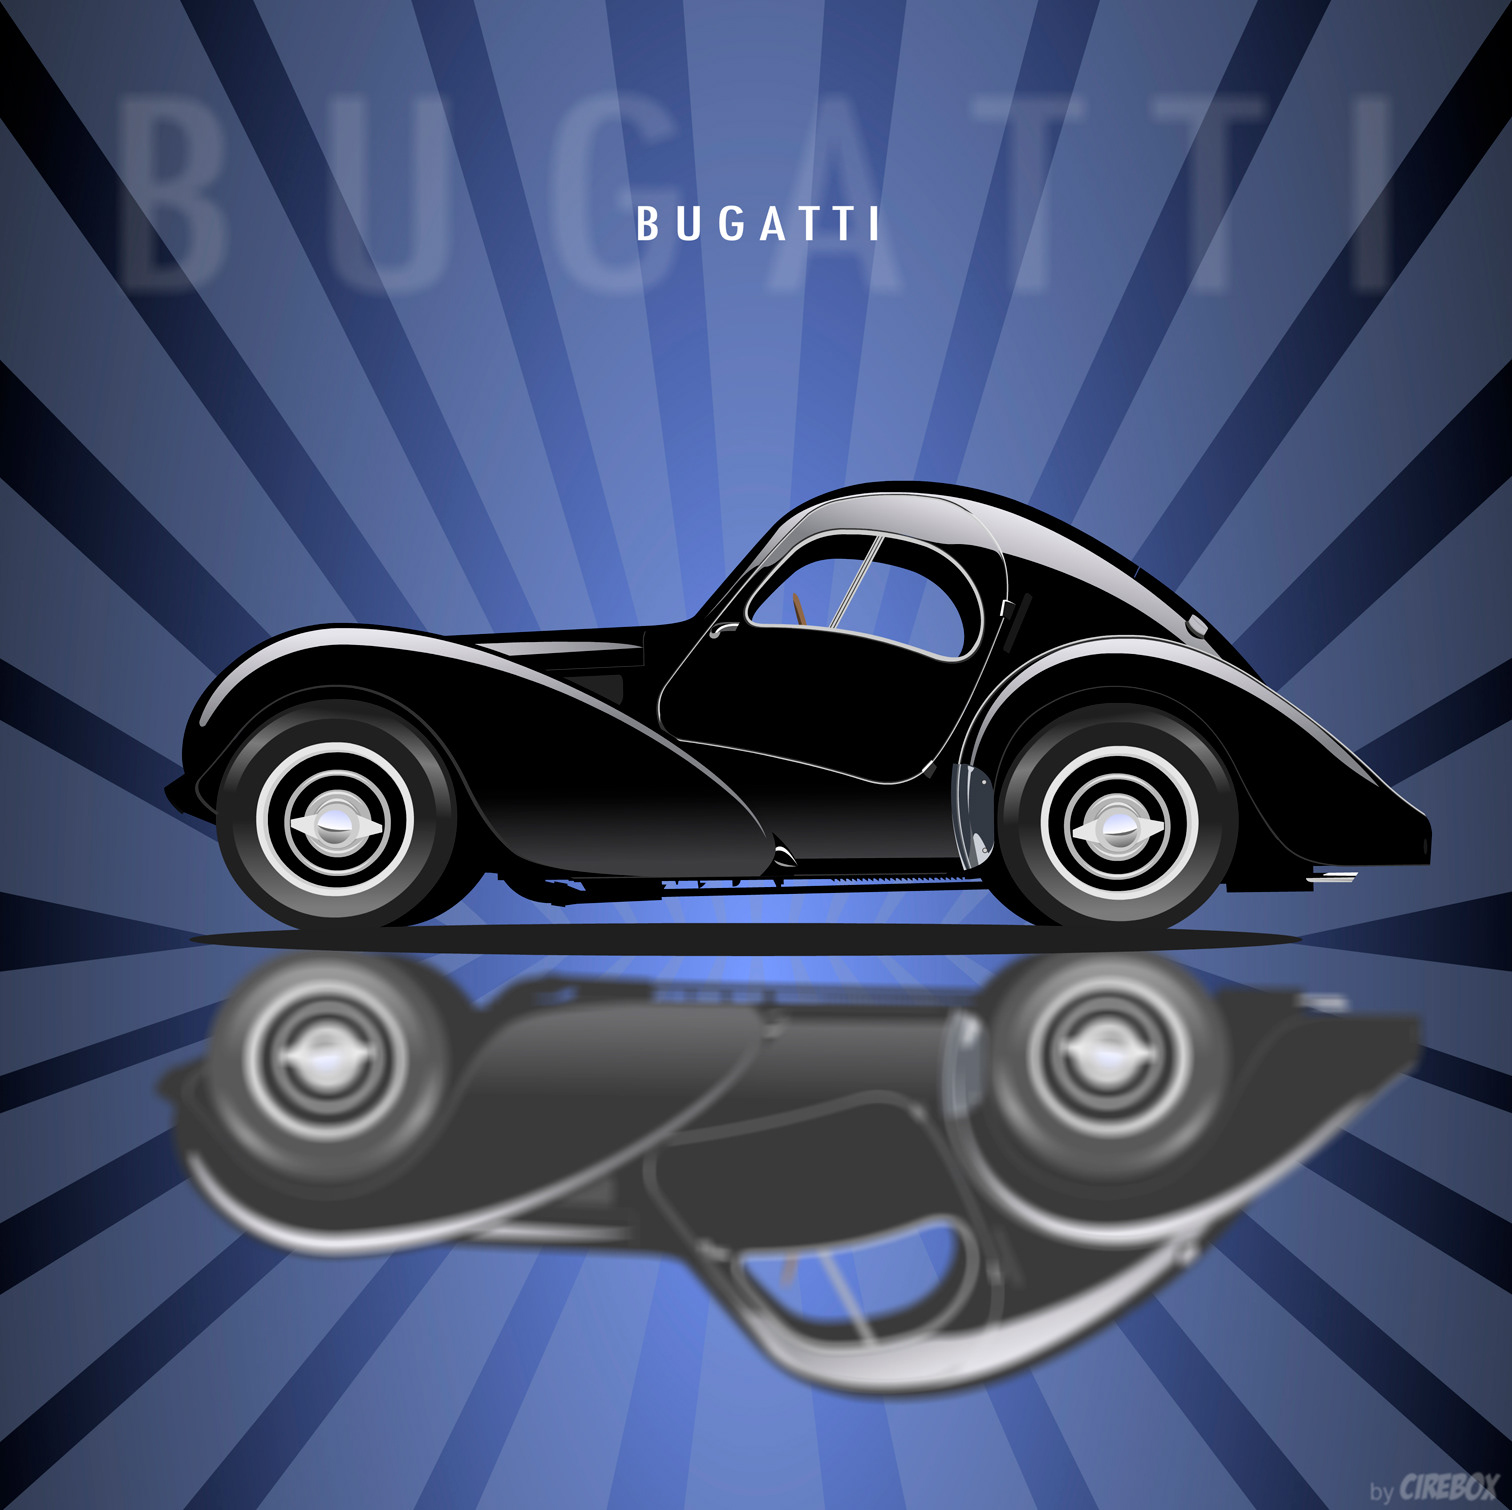 CIREBOX Illustration - ICONIC CARS